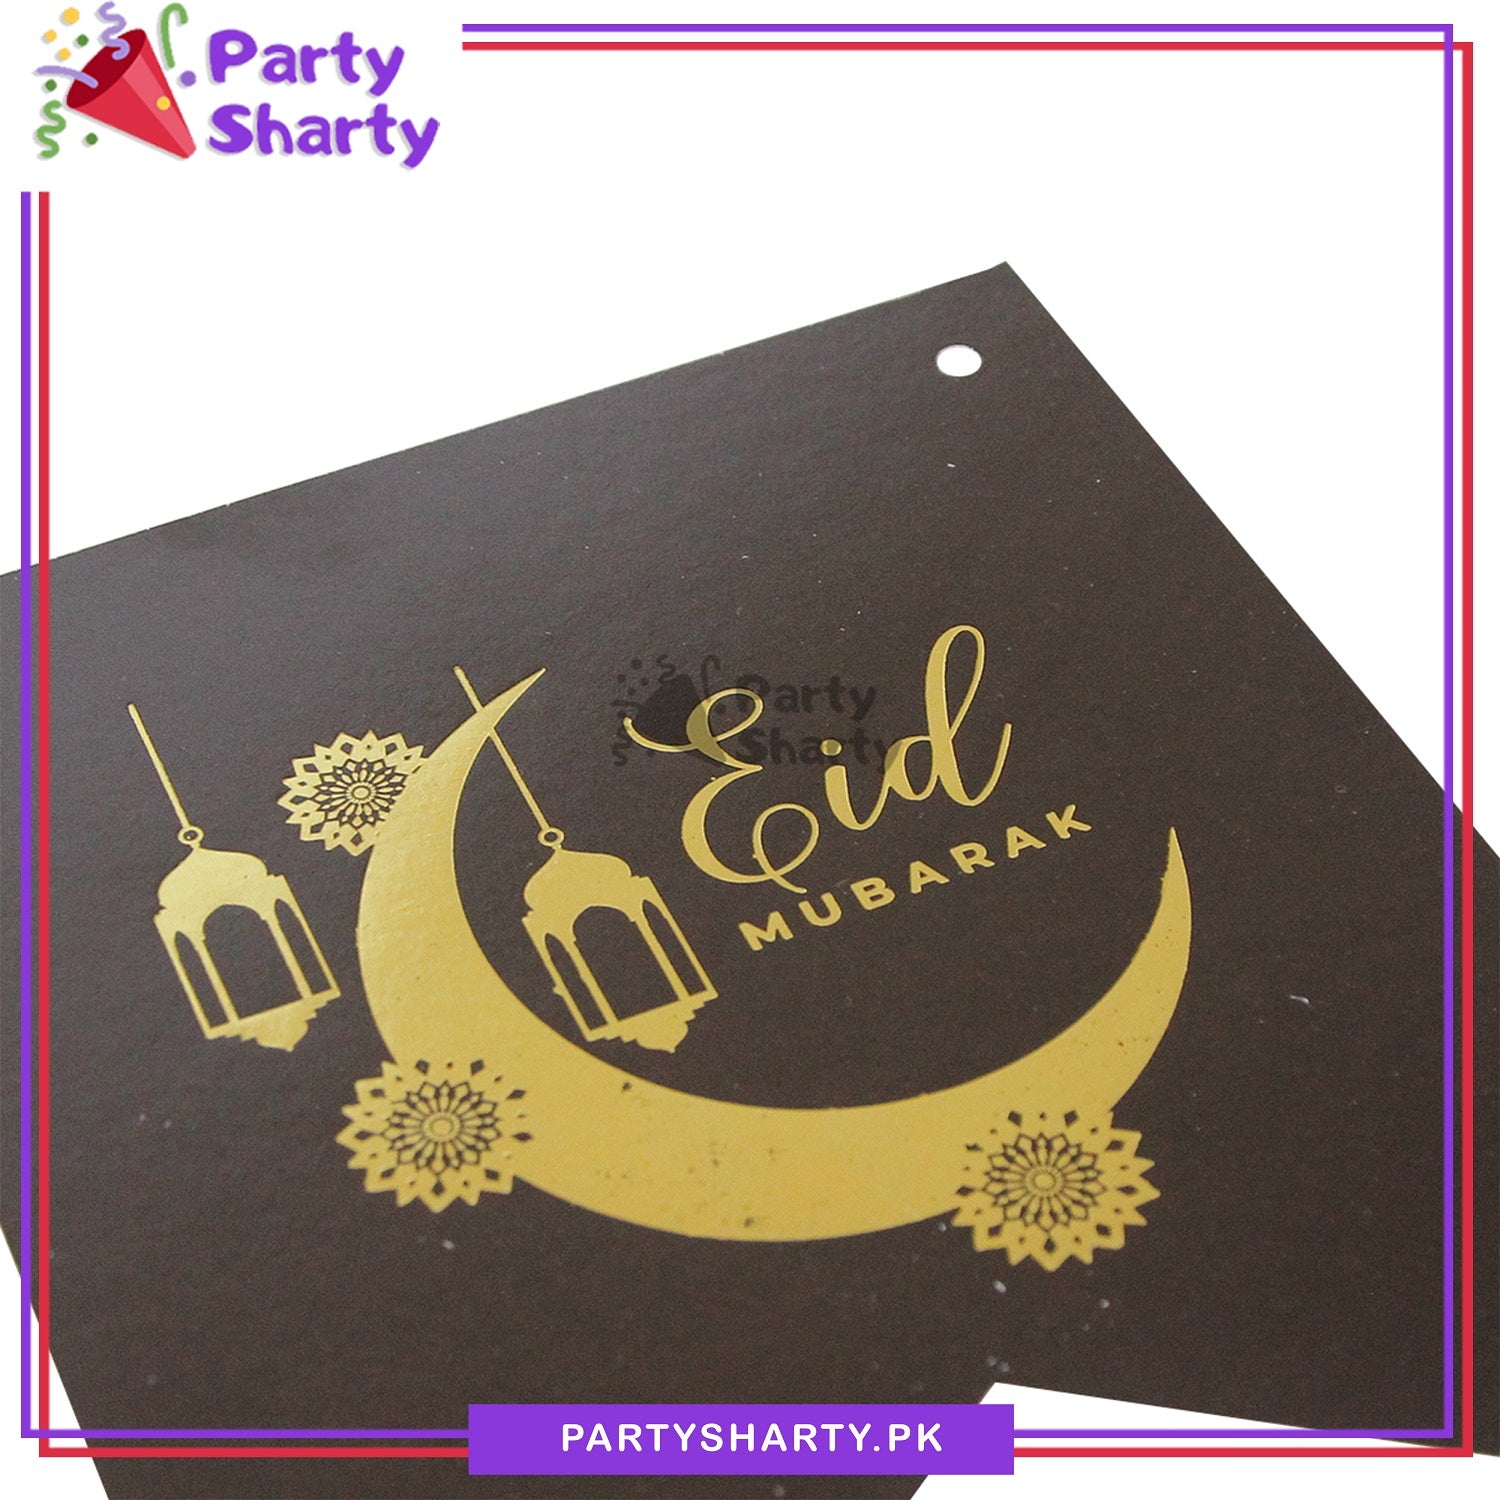 Eid Mubarak Printed Black Card Banner For Eid Milan Party Decoration and Celebration